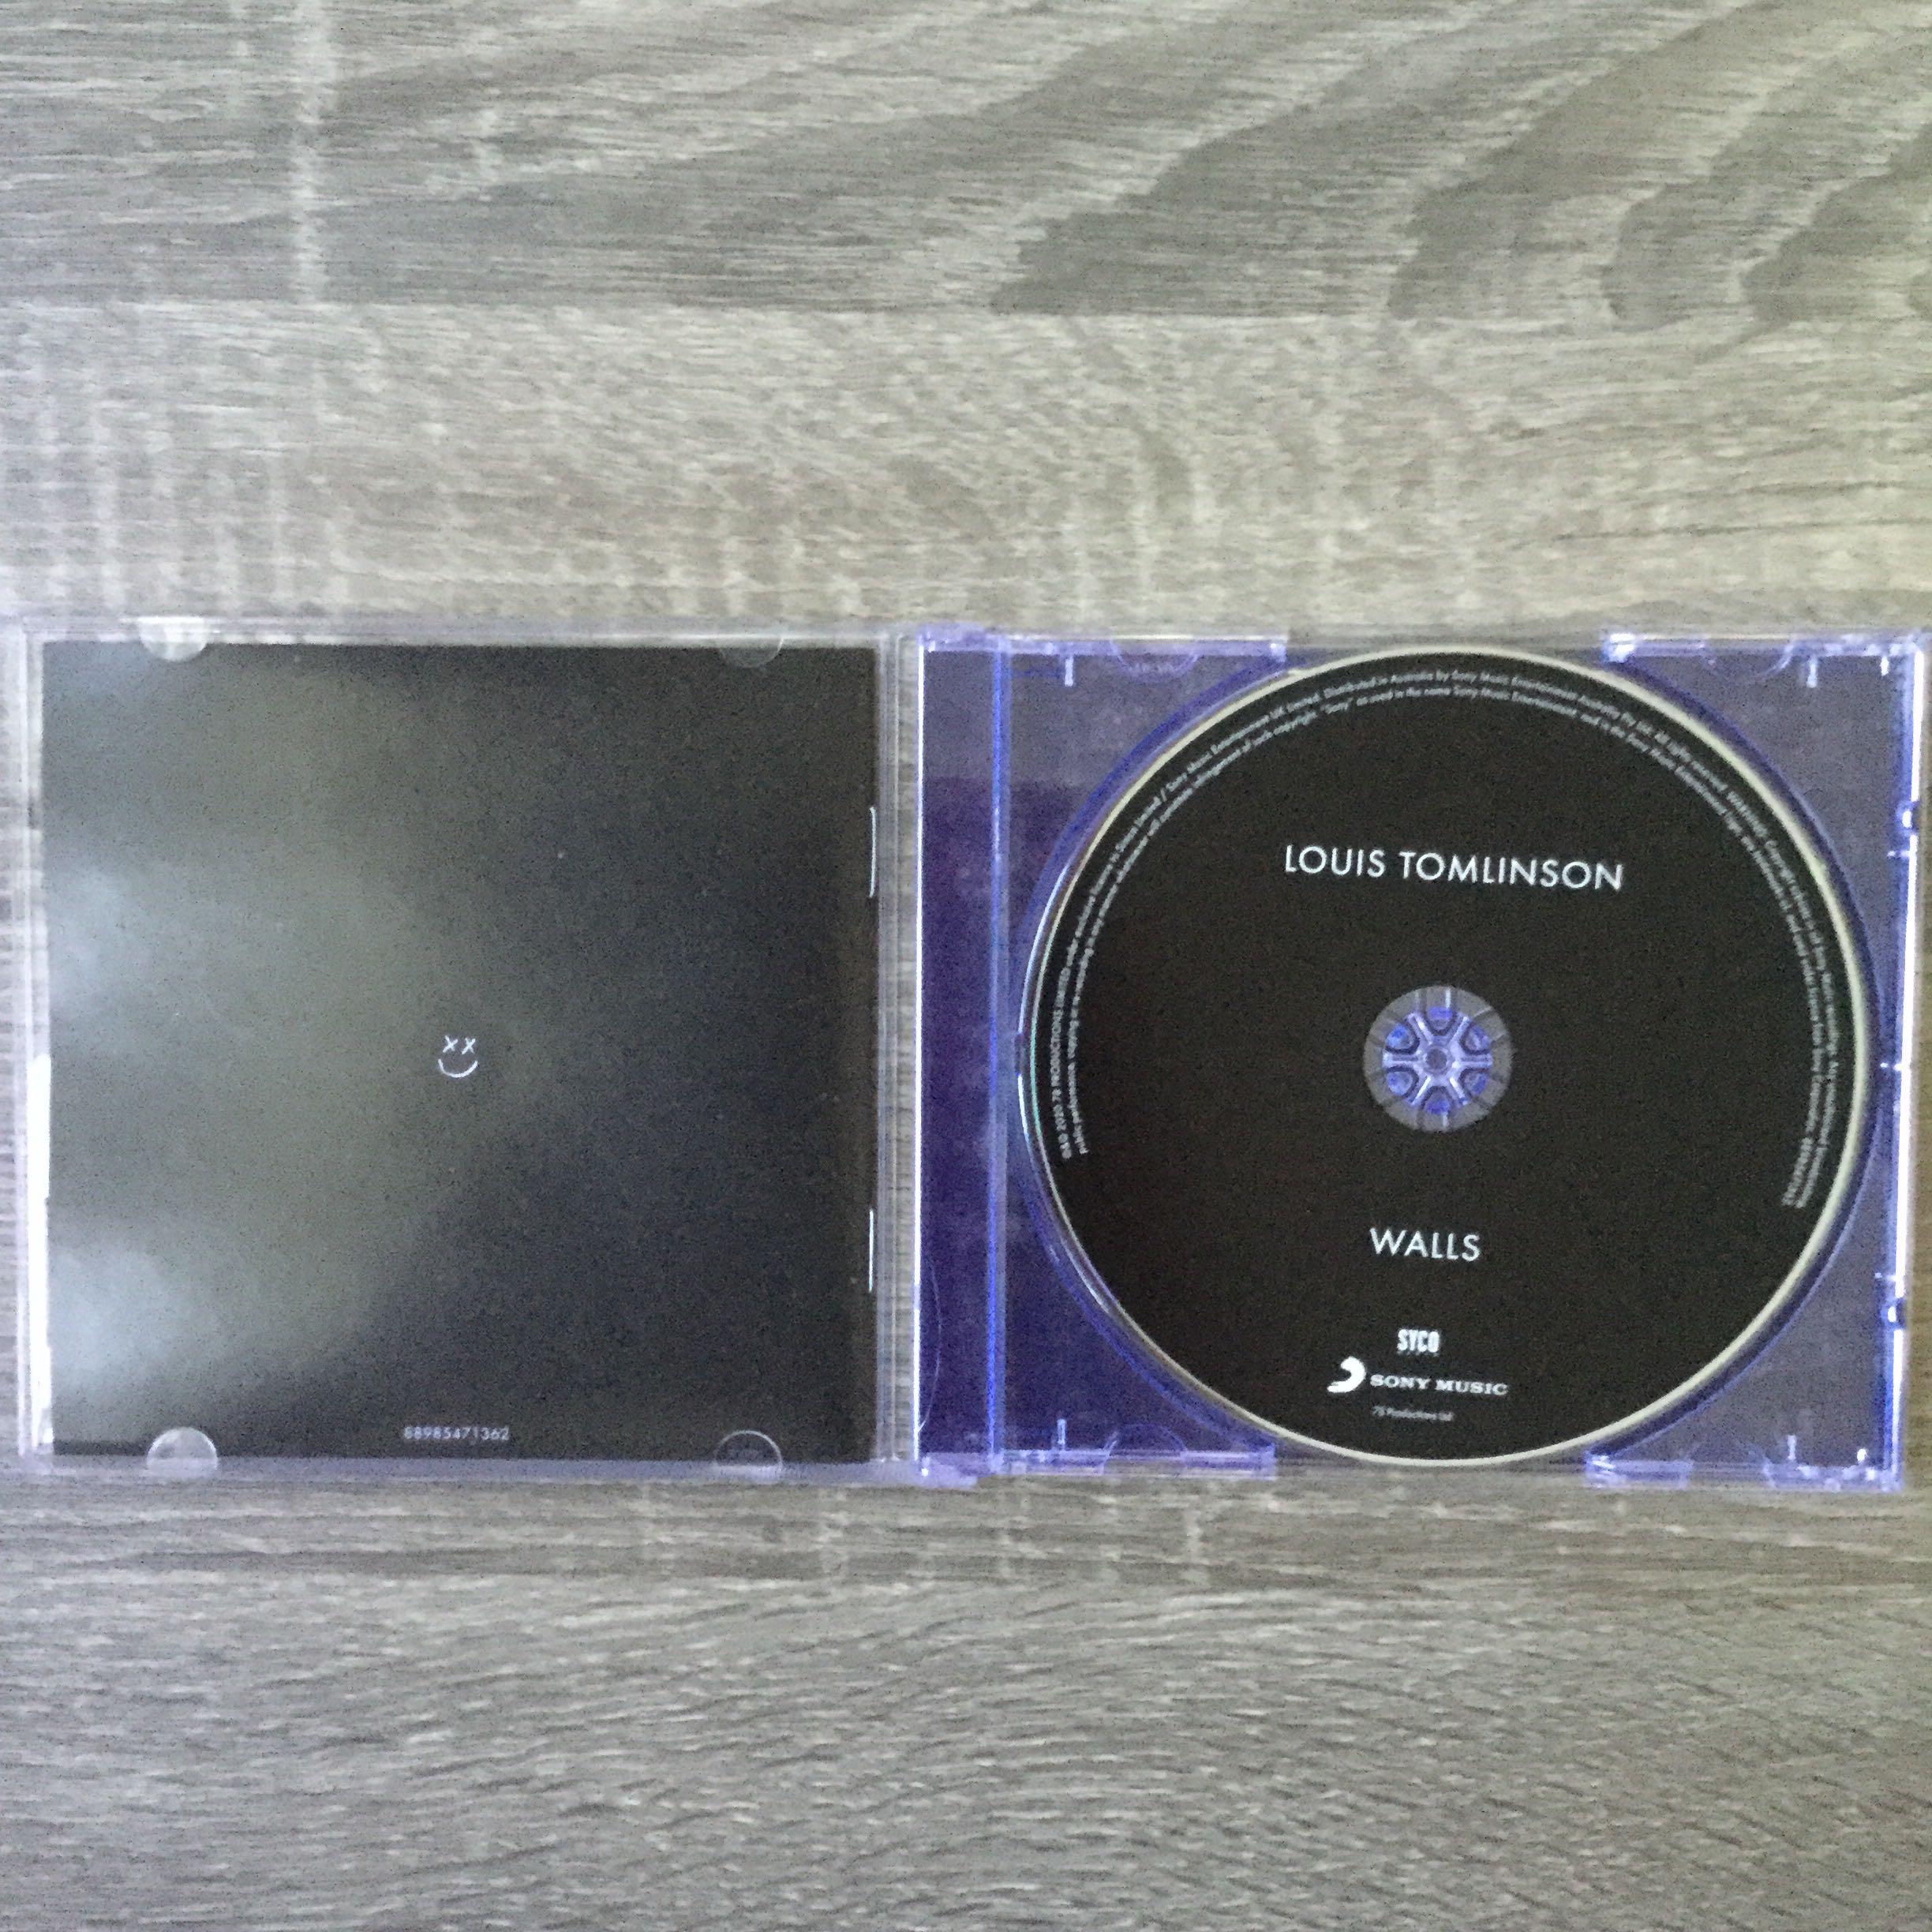 Jual CD Louis Tomlinson - Walls US Album Audio Music - Kota Surabaya - Mega  Disc